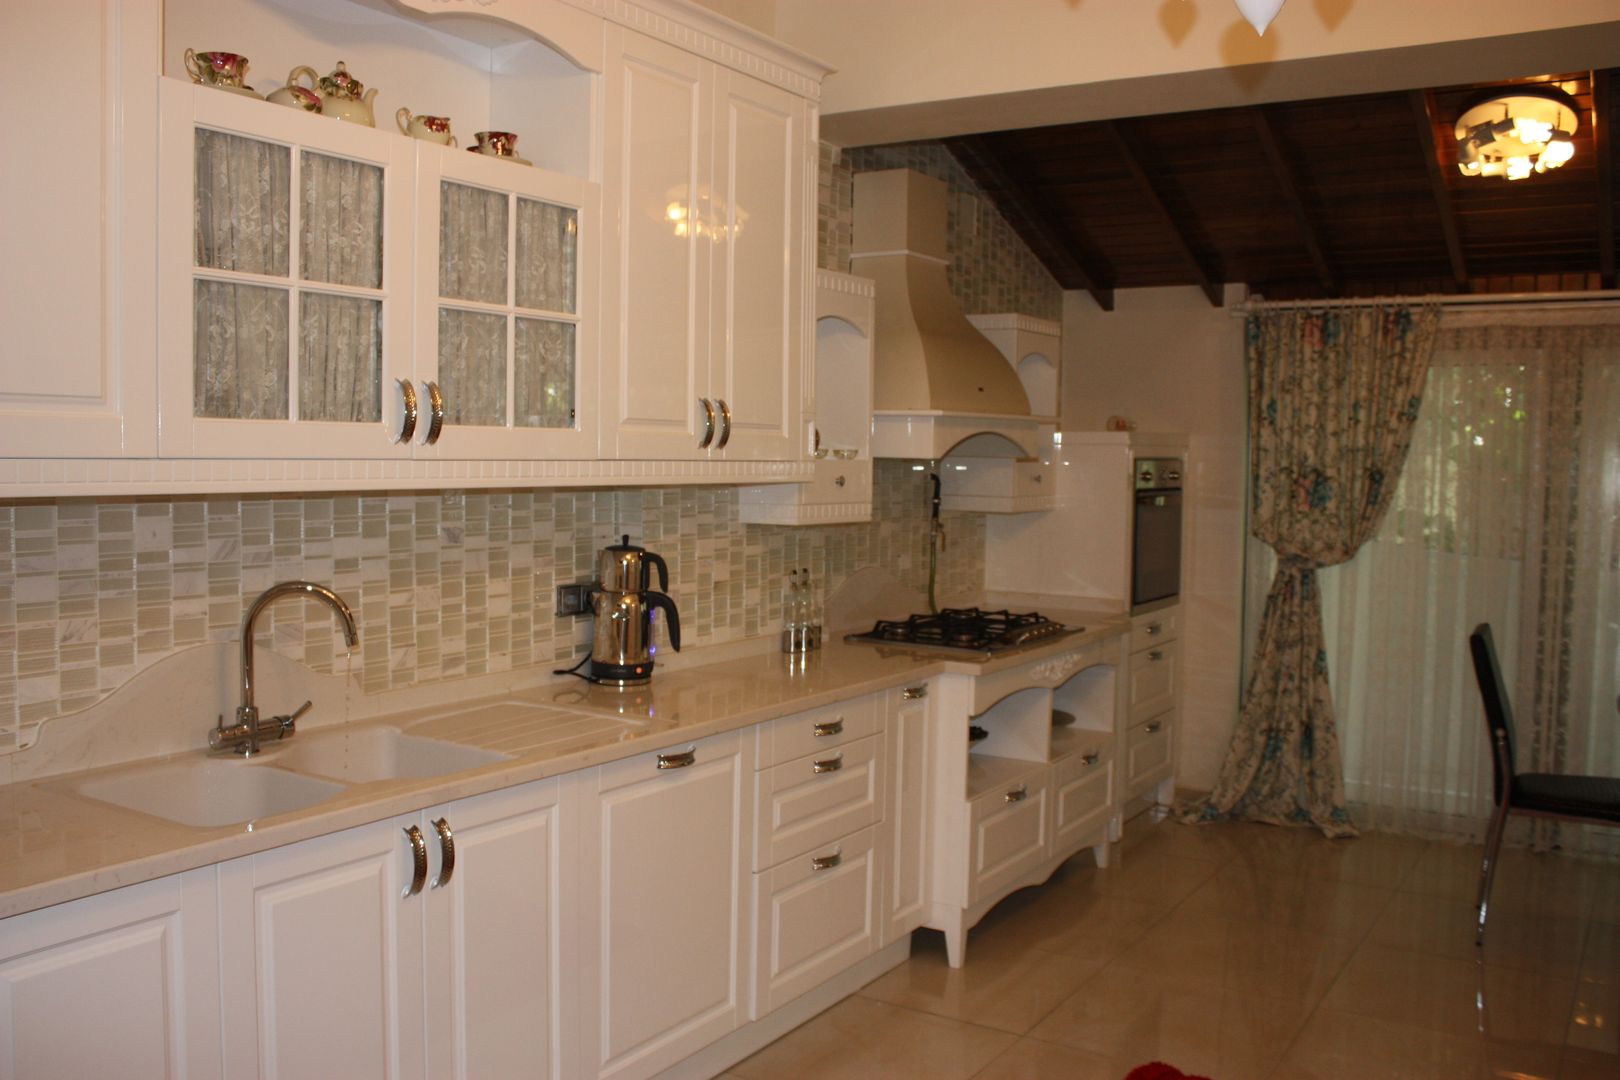 VİLLA-2, AYAYAPITASARIM AYAYAPITASARIM Rustic style kitchen Cabinets & shelves